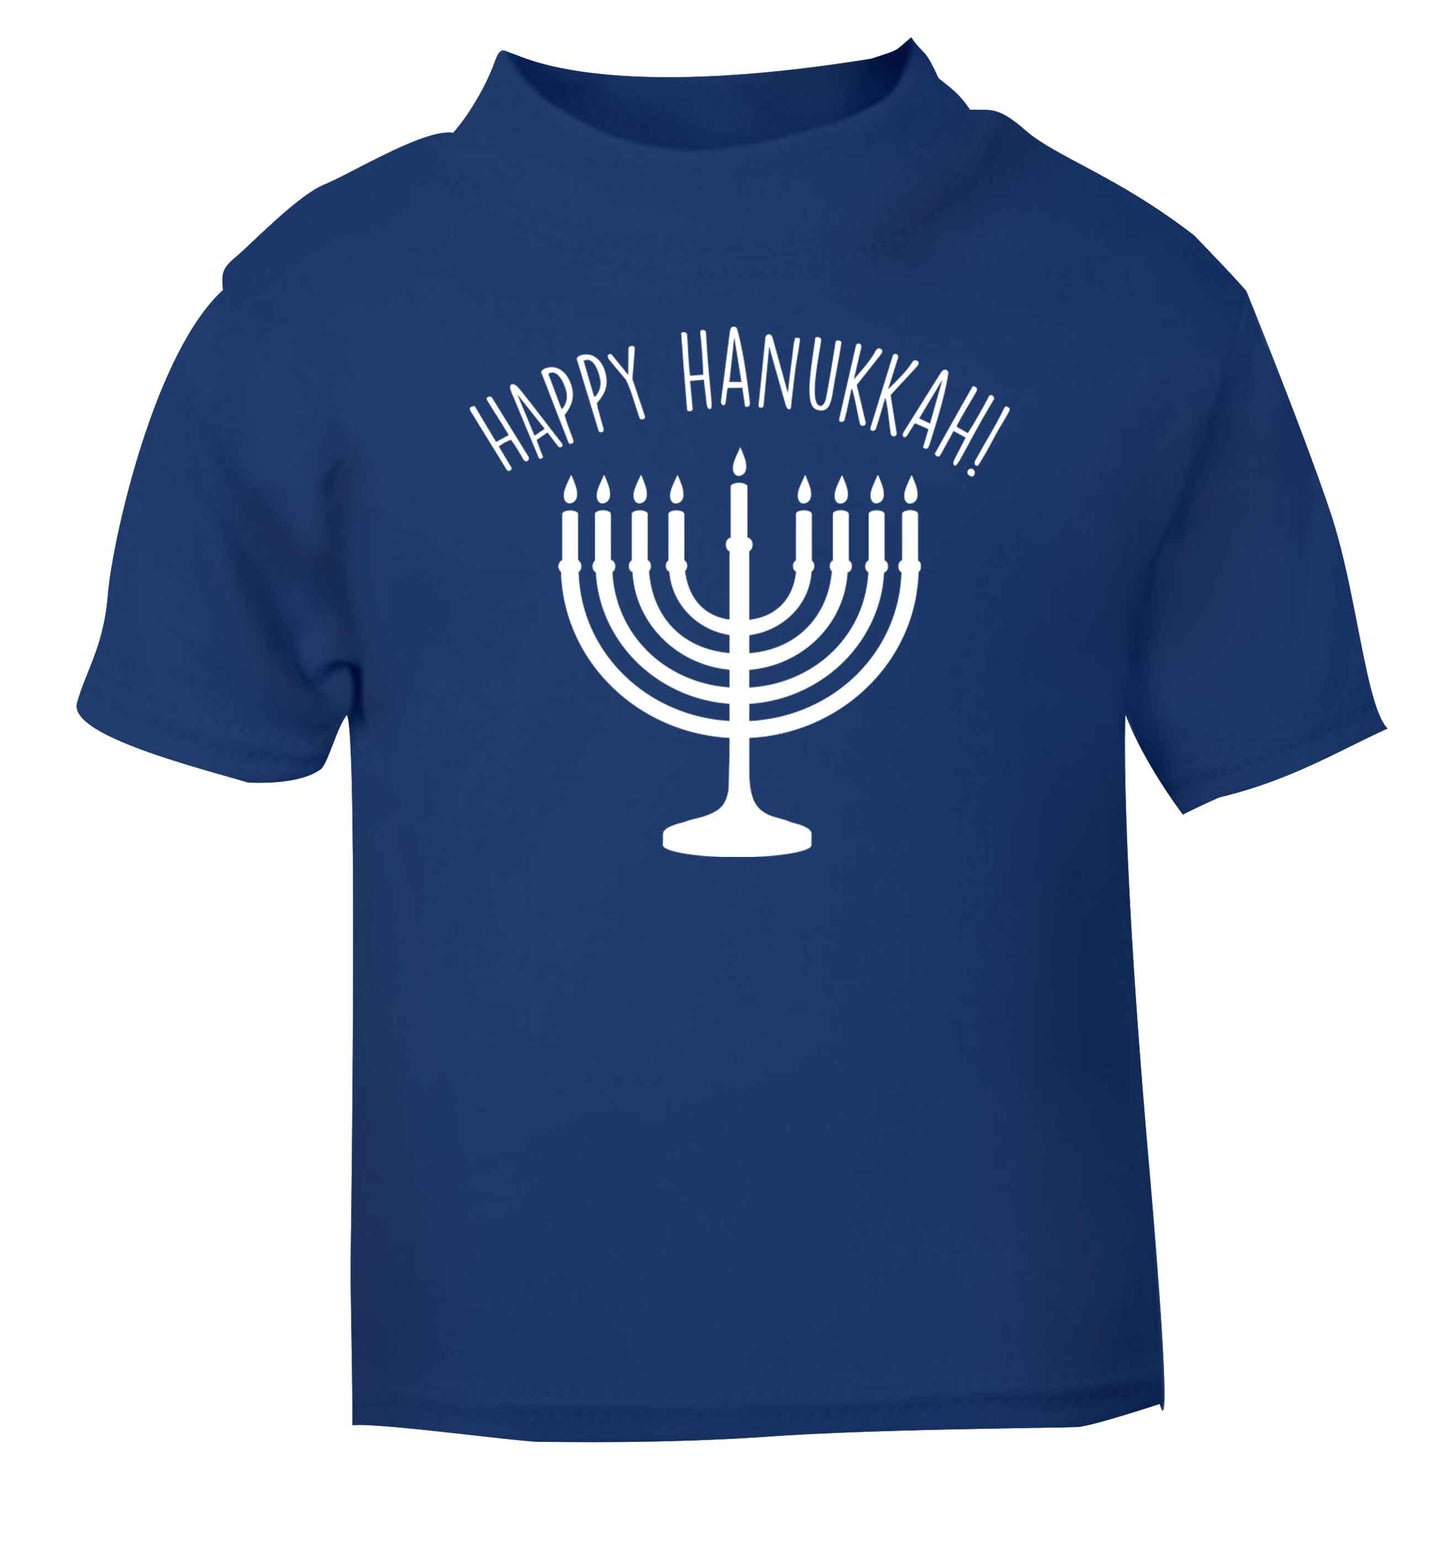 Happy hanukkah blue baby toddler Tshirt 2 Years